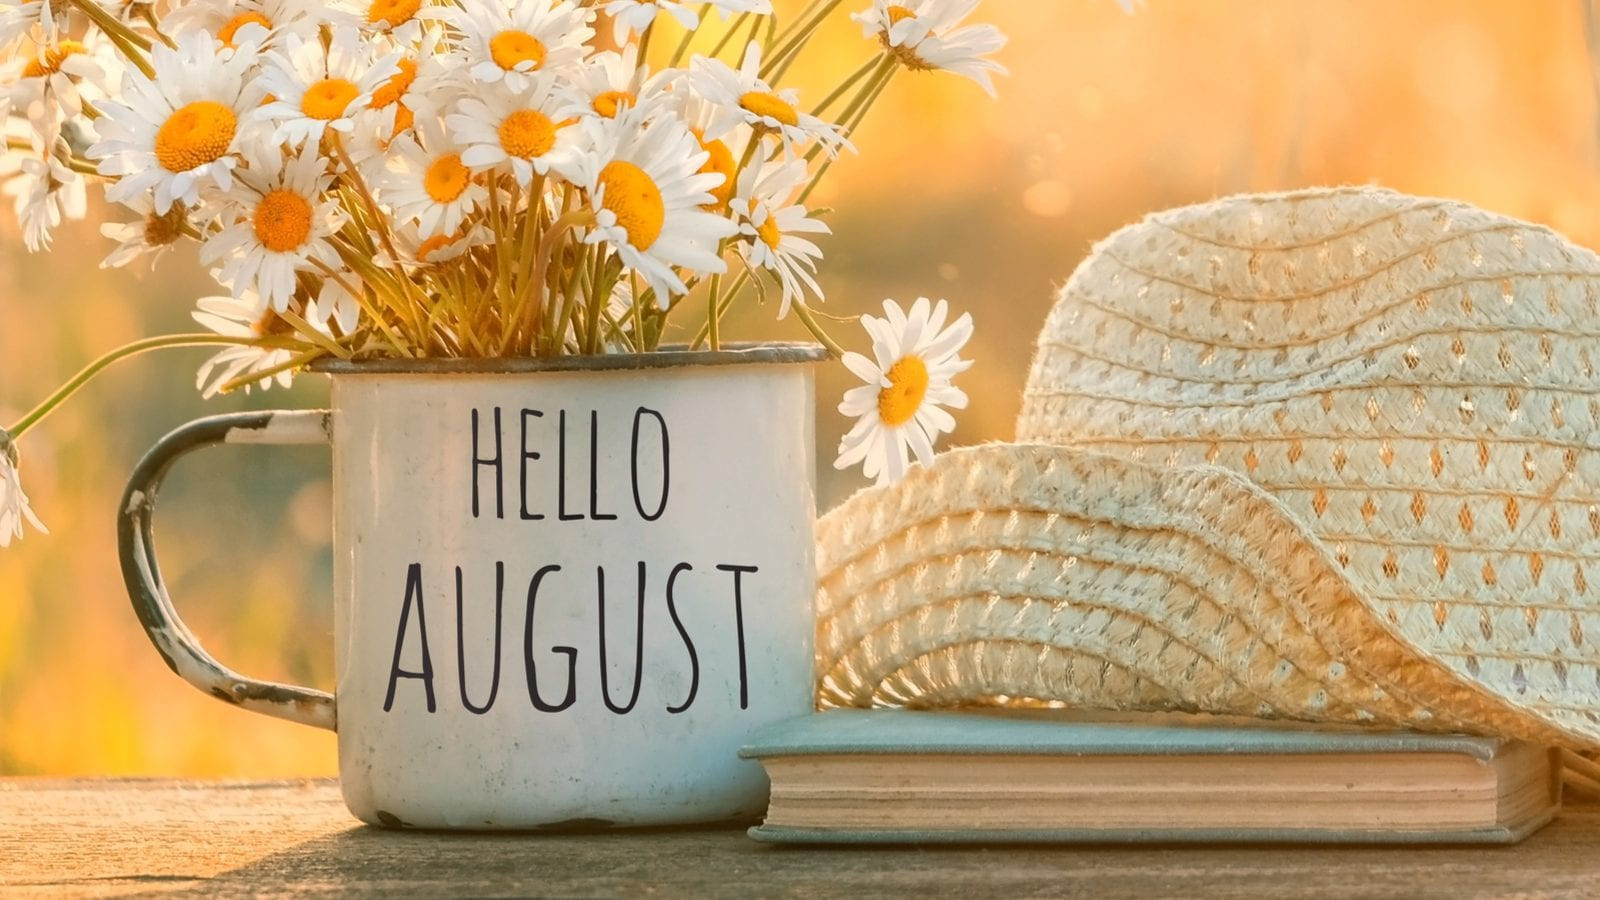 August 2021 Festivals Calendar: Bank Holidays, Cricket-Food Holidays For 2021